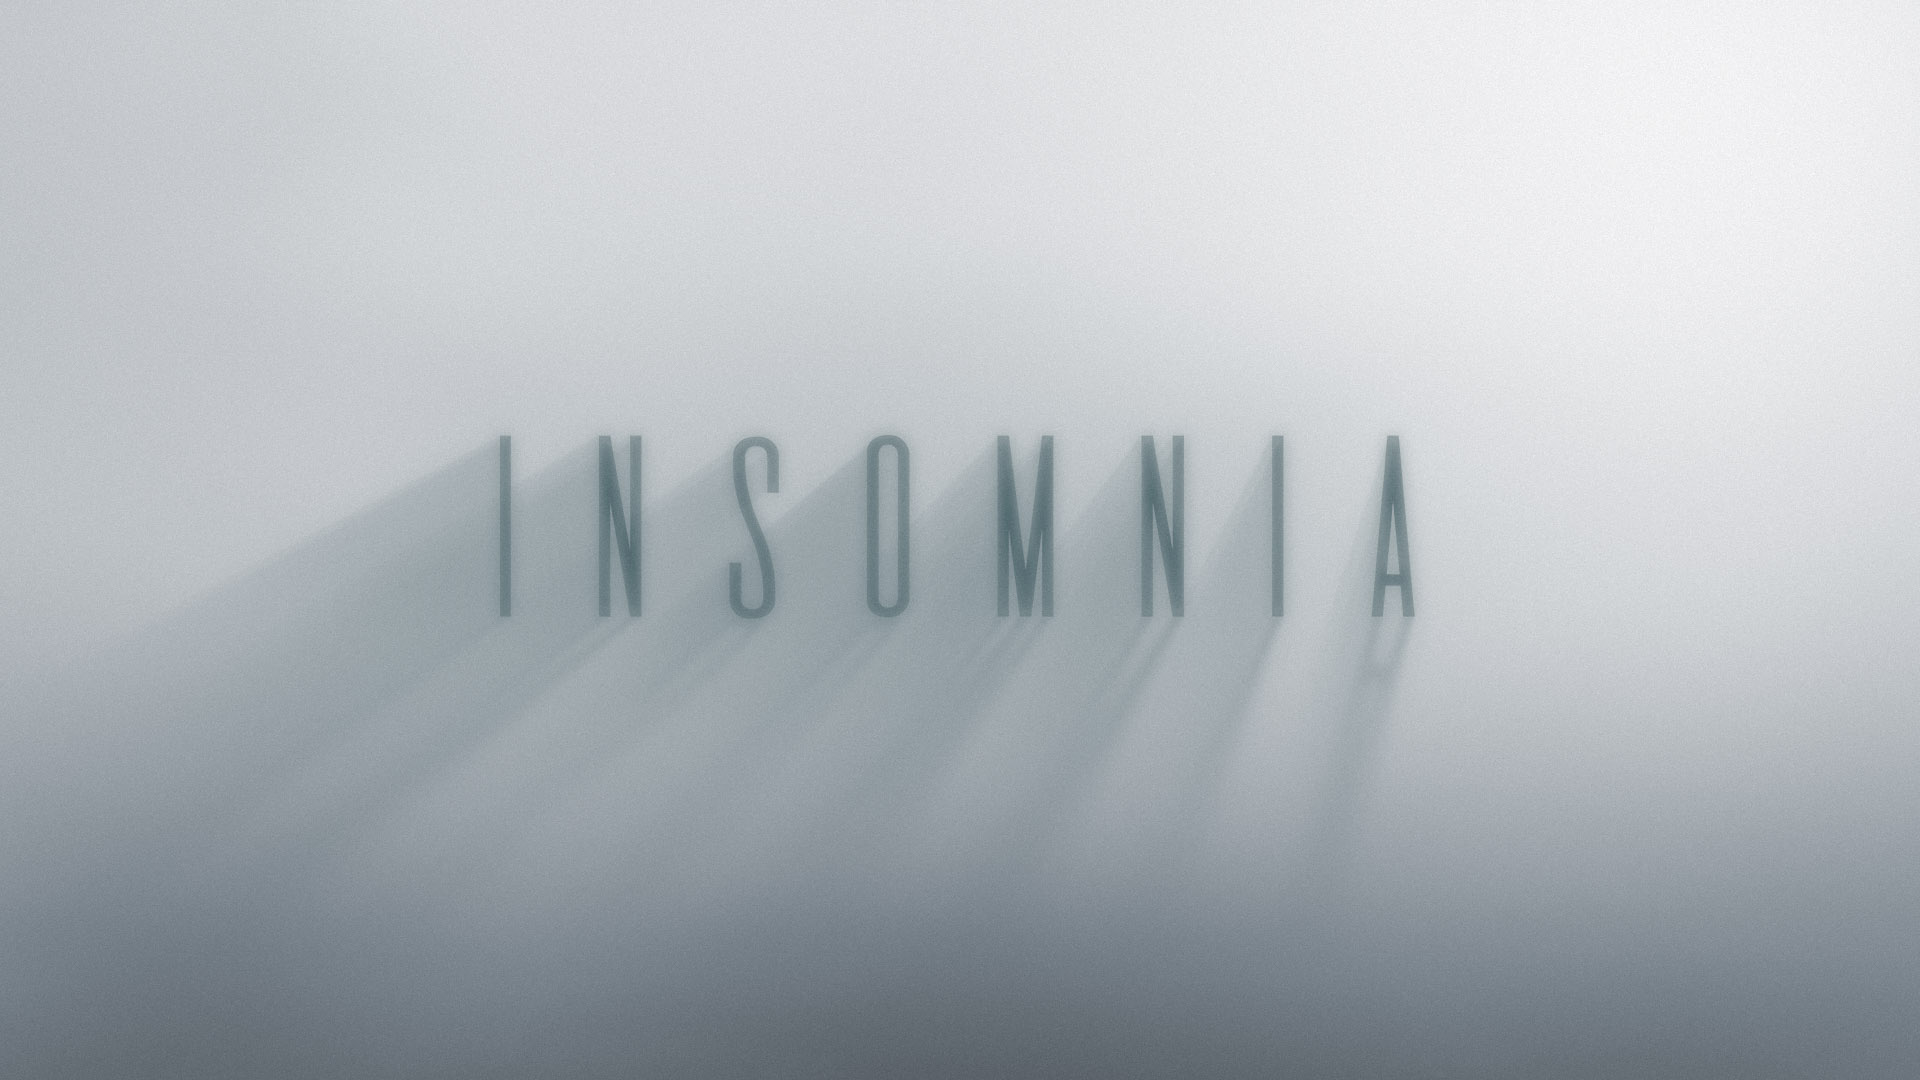 Insomnia Logo